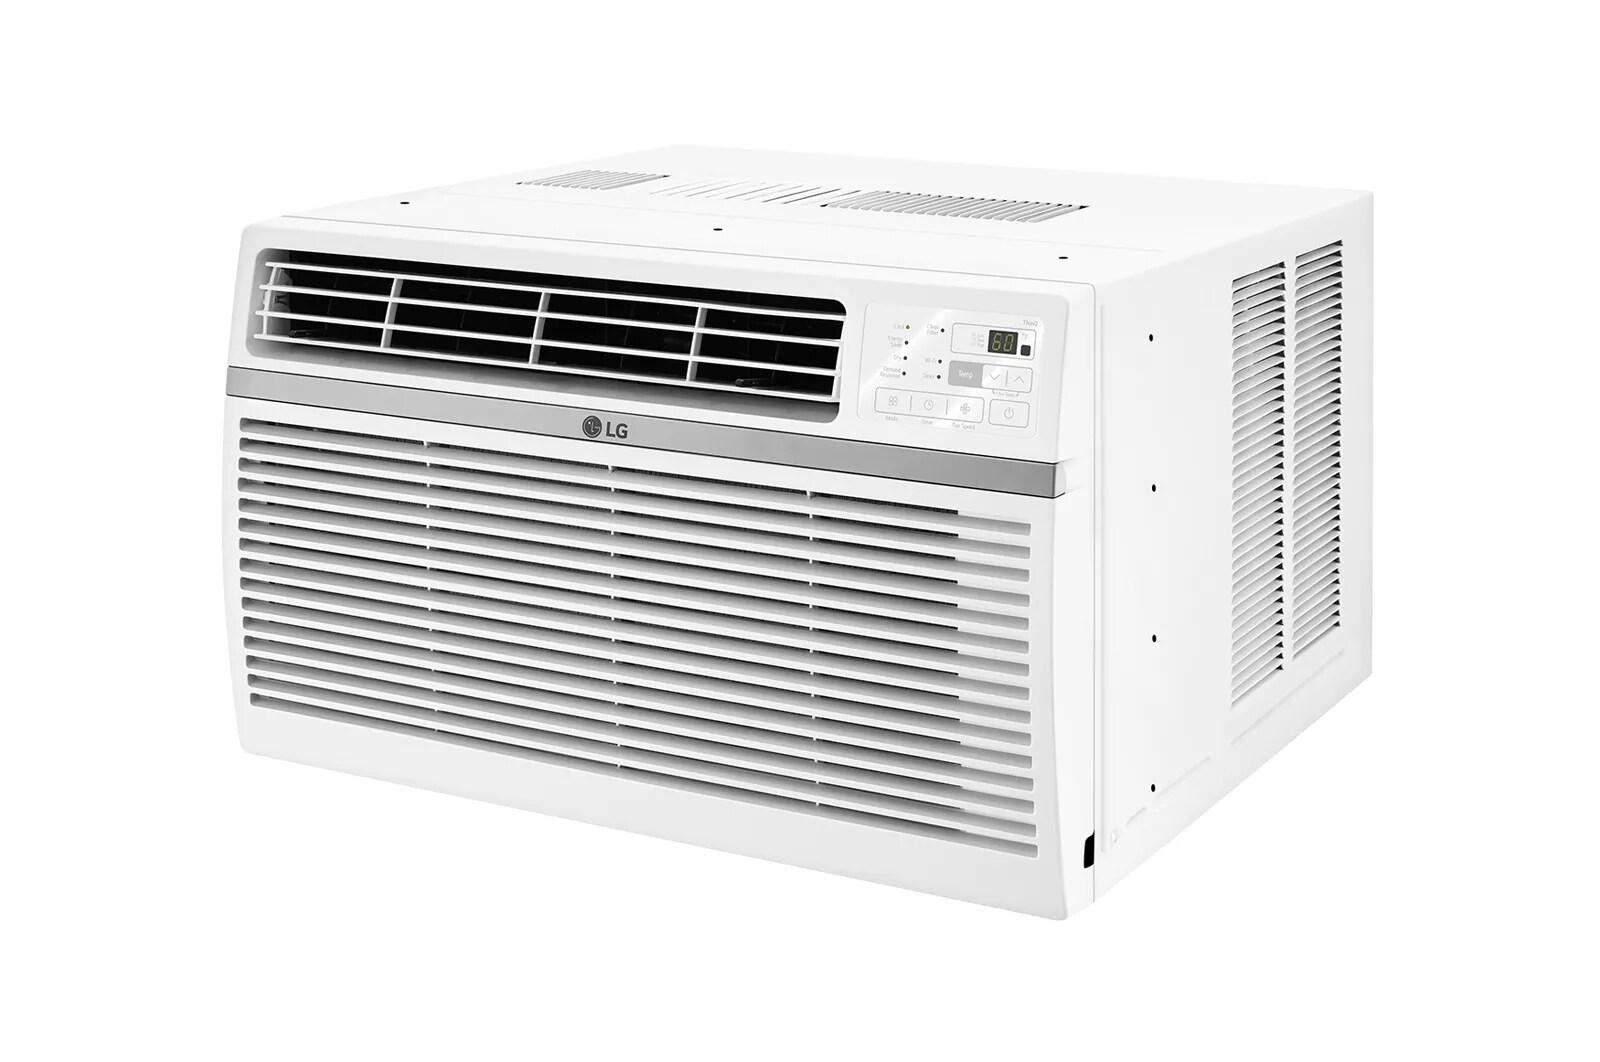 Lg 10,000 BTU Window Air Conditioner